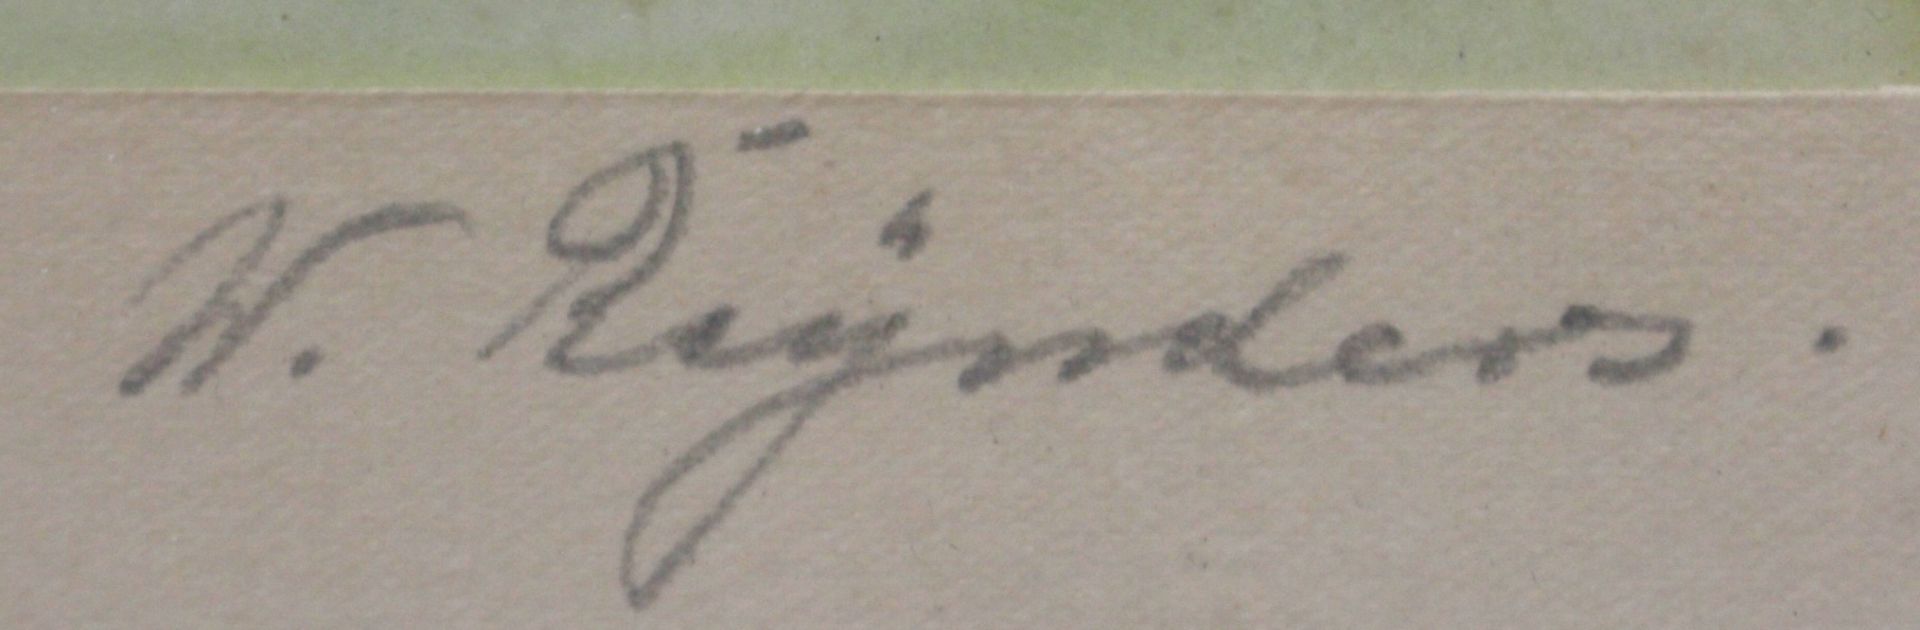 Reynders, W., dt. Maler 1. Hälfte 20. Jh. "Gebirgslandschaft mit See", Aquarell, sign., 30x 49 - Bild 3 aus 3